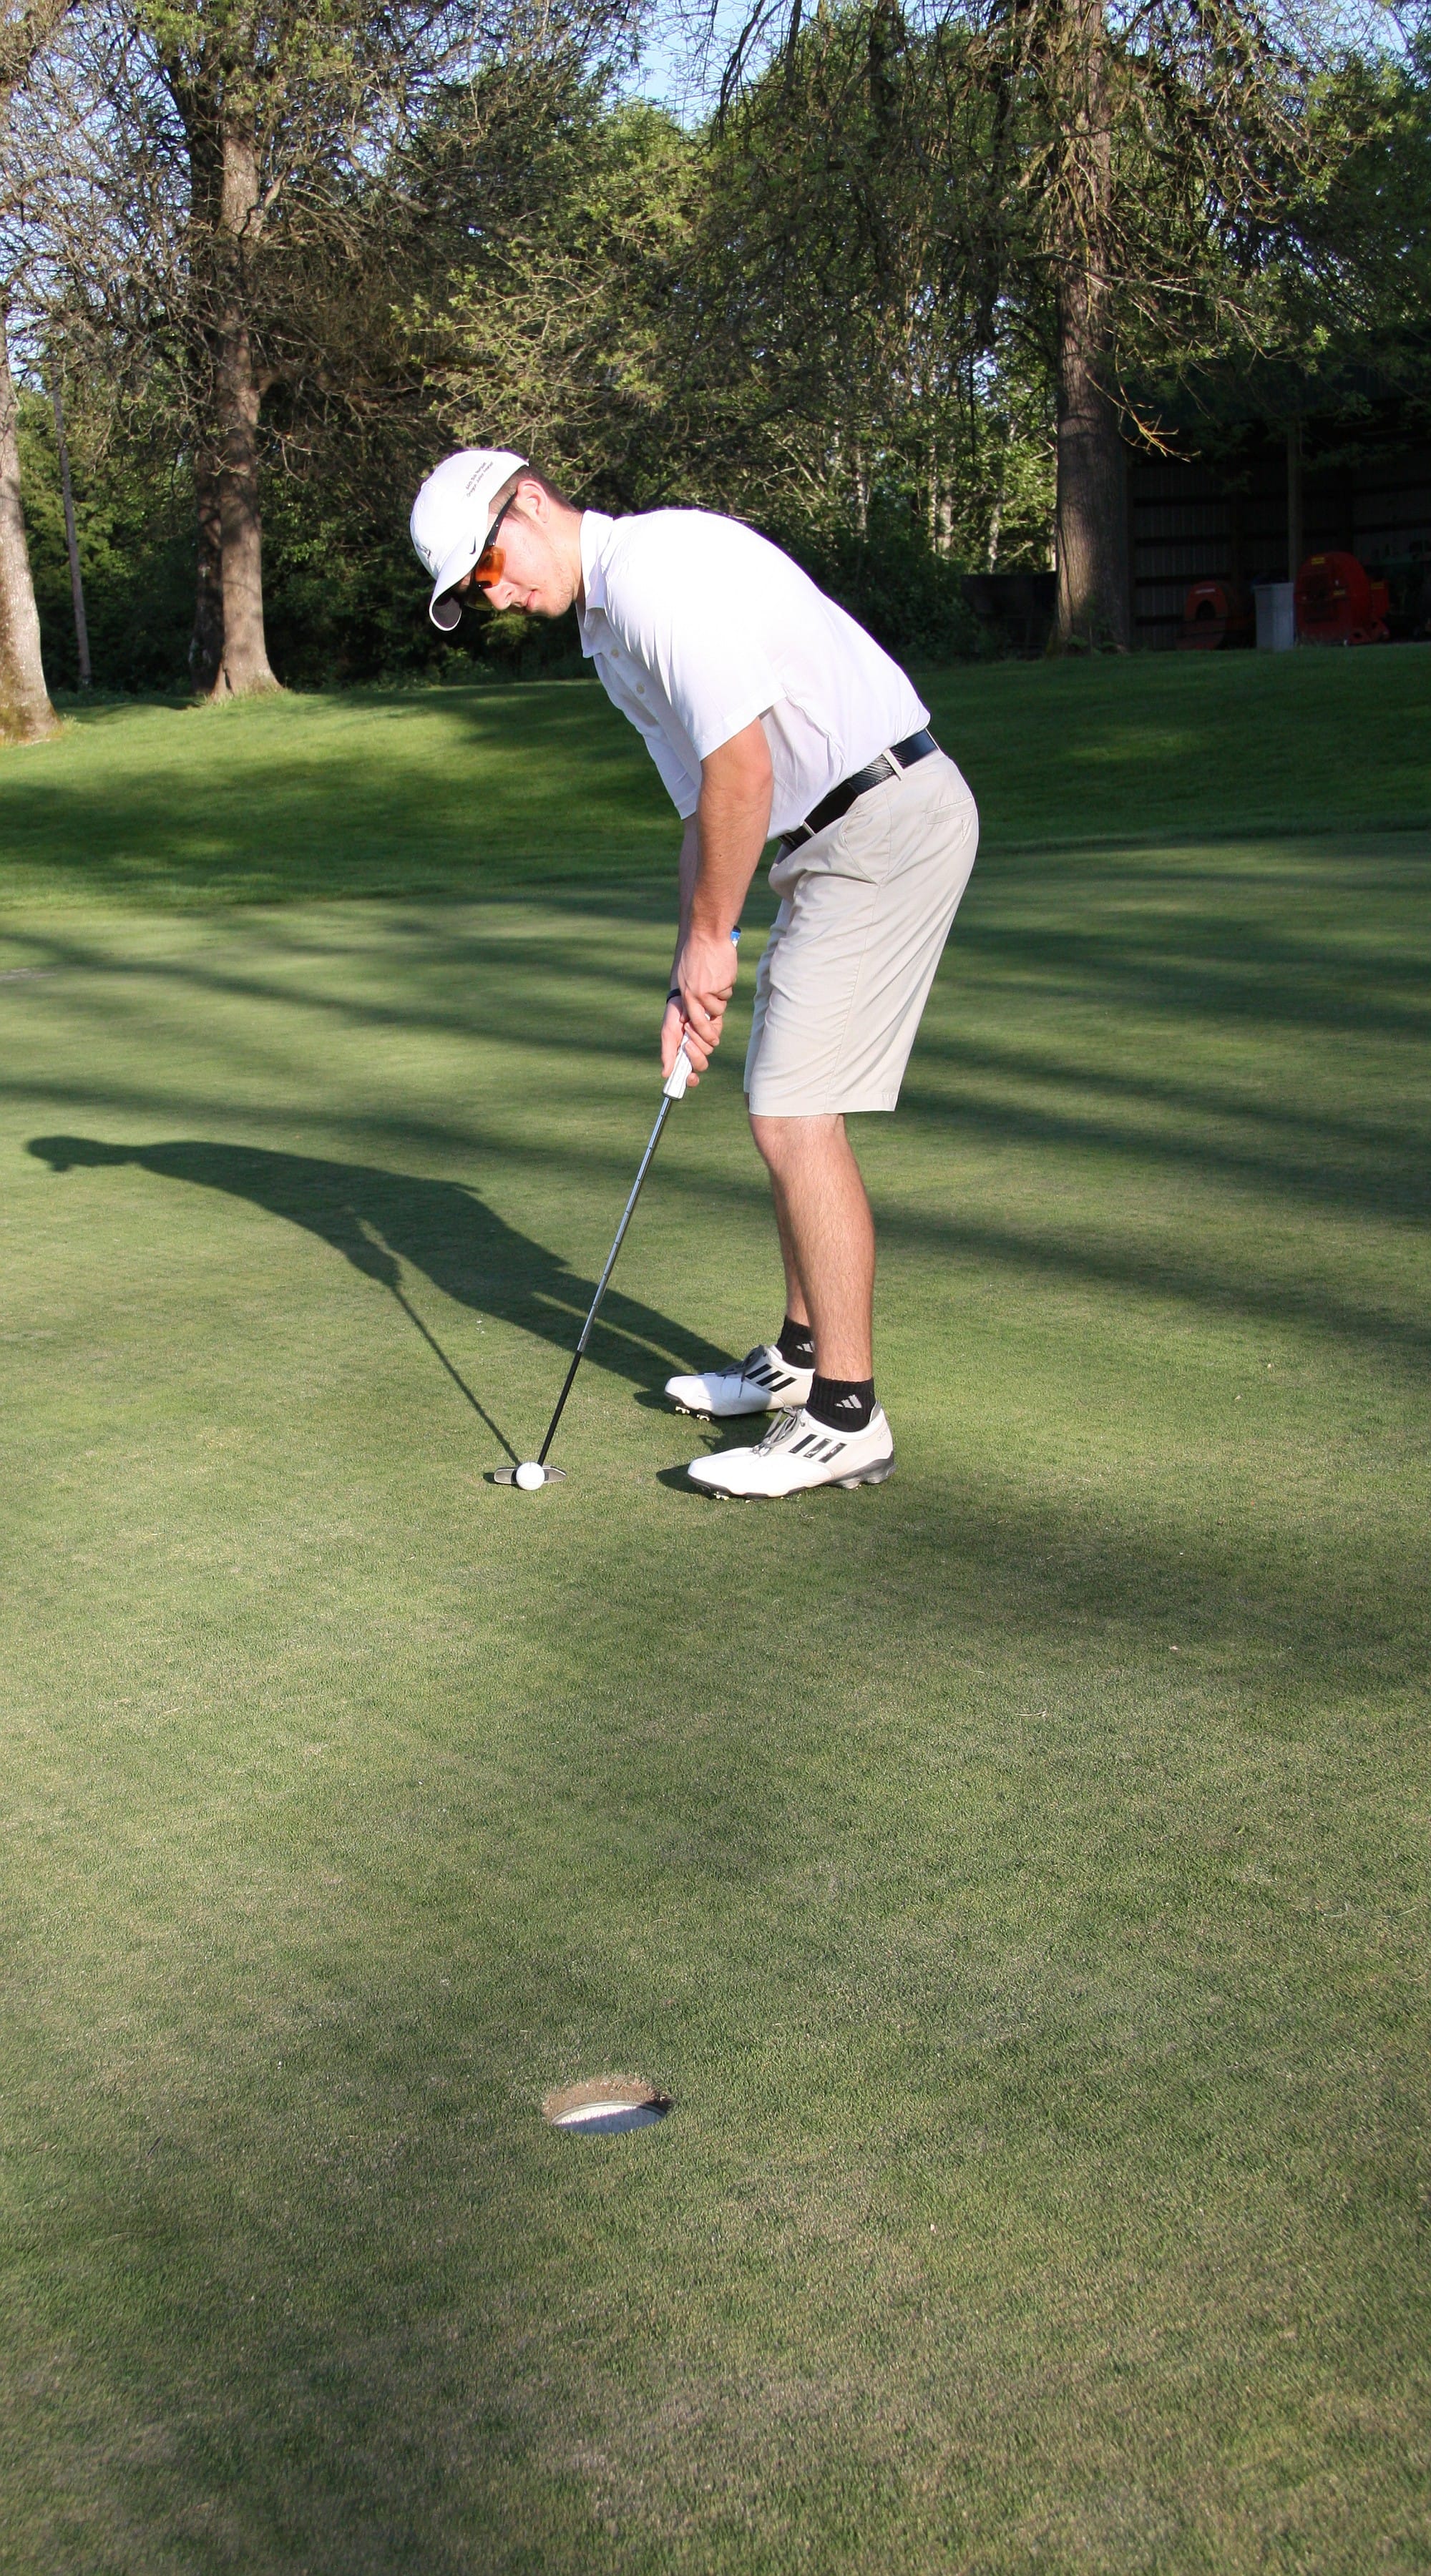 Hudson's Bay golfer Landon Joy practices putting at Royal Oaks Country Club.